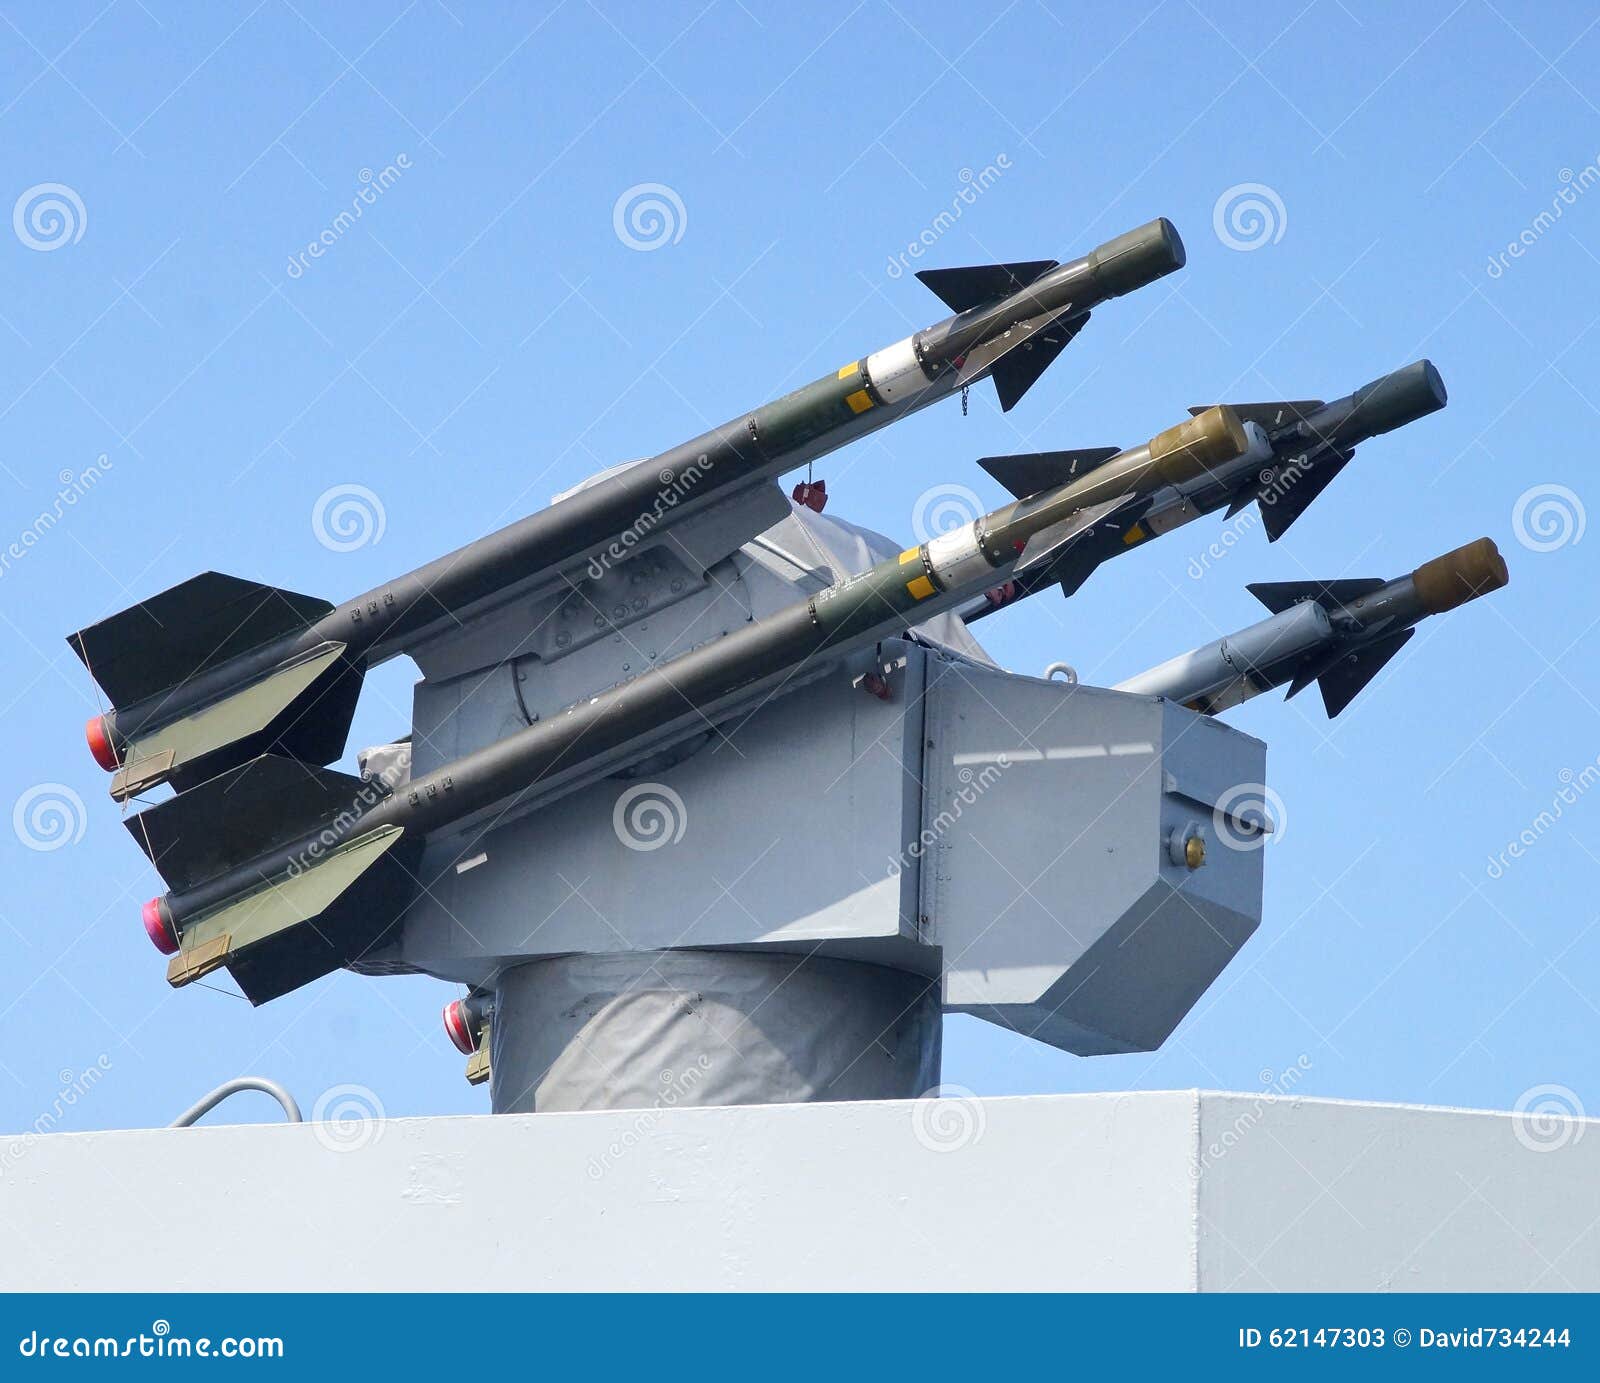 sea-chaparral-missile-closeup-battleship-62147303.jpg